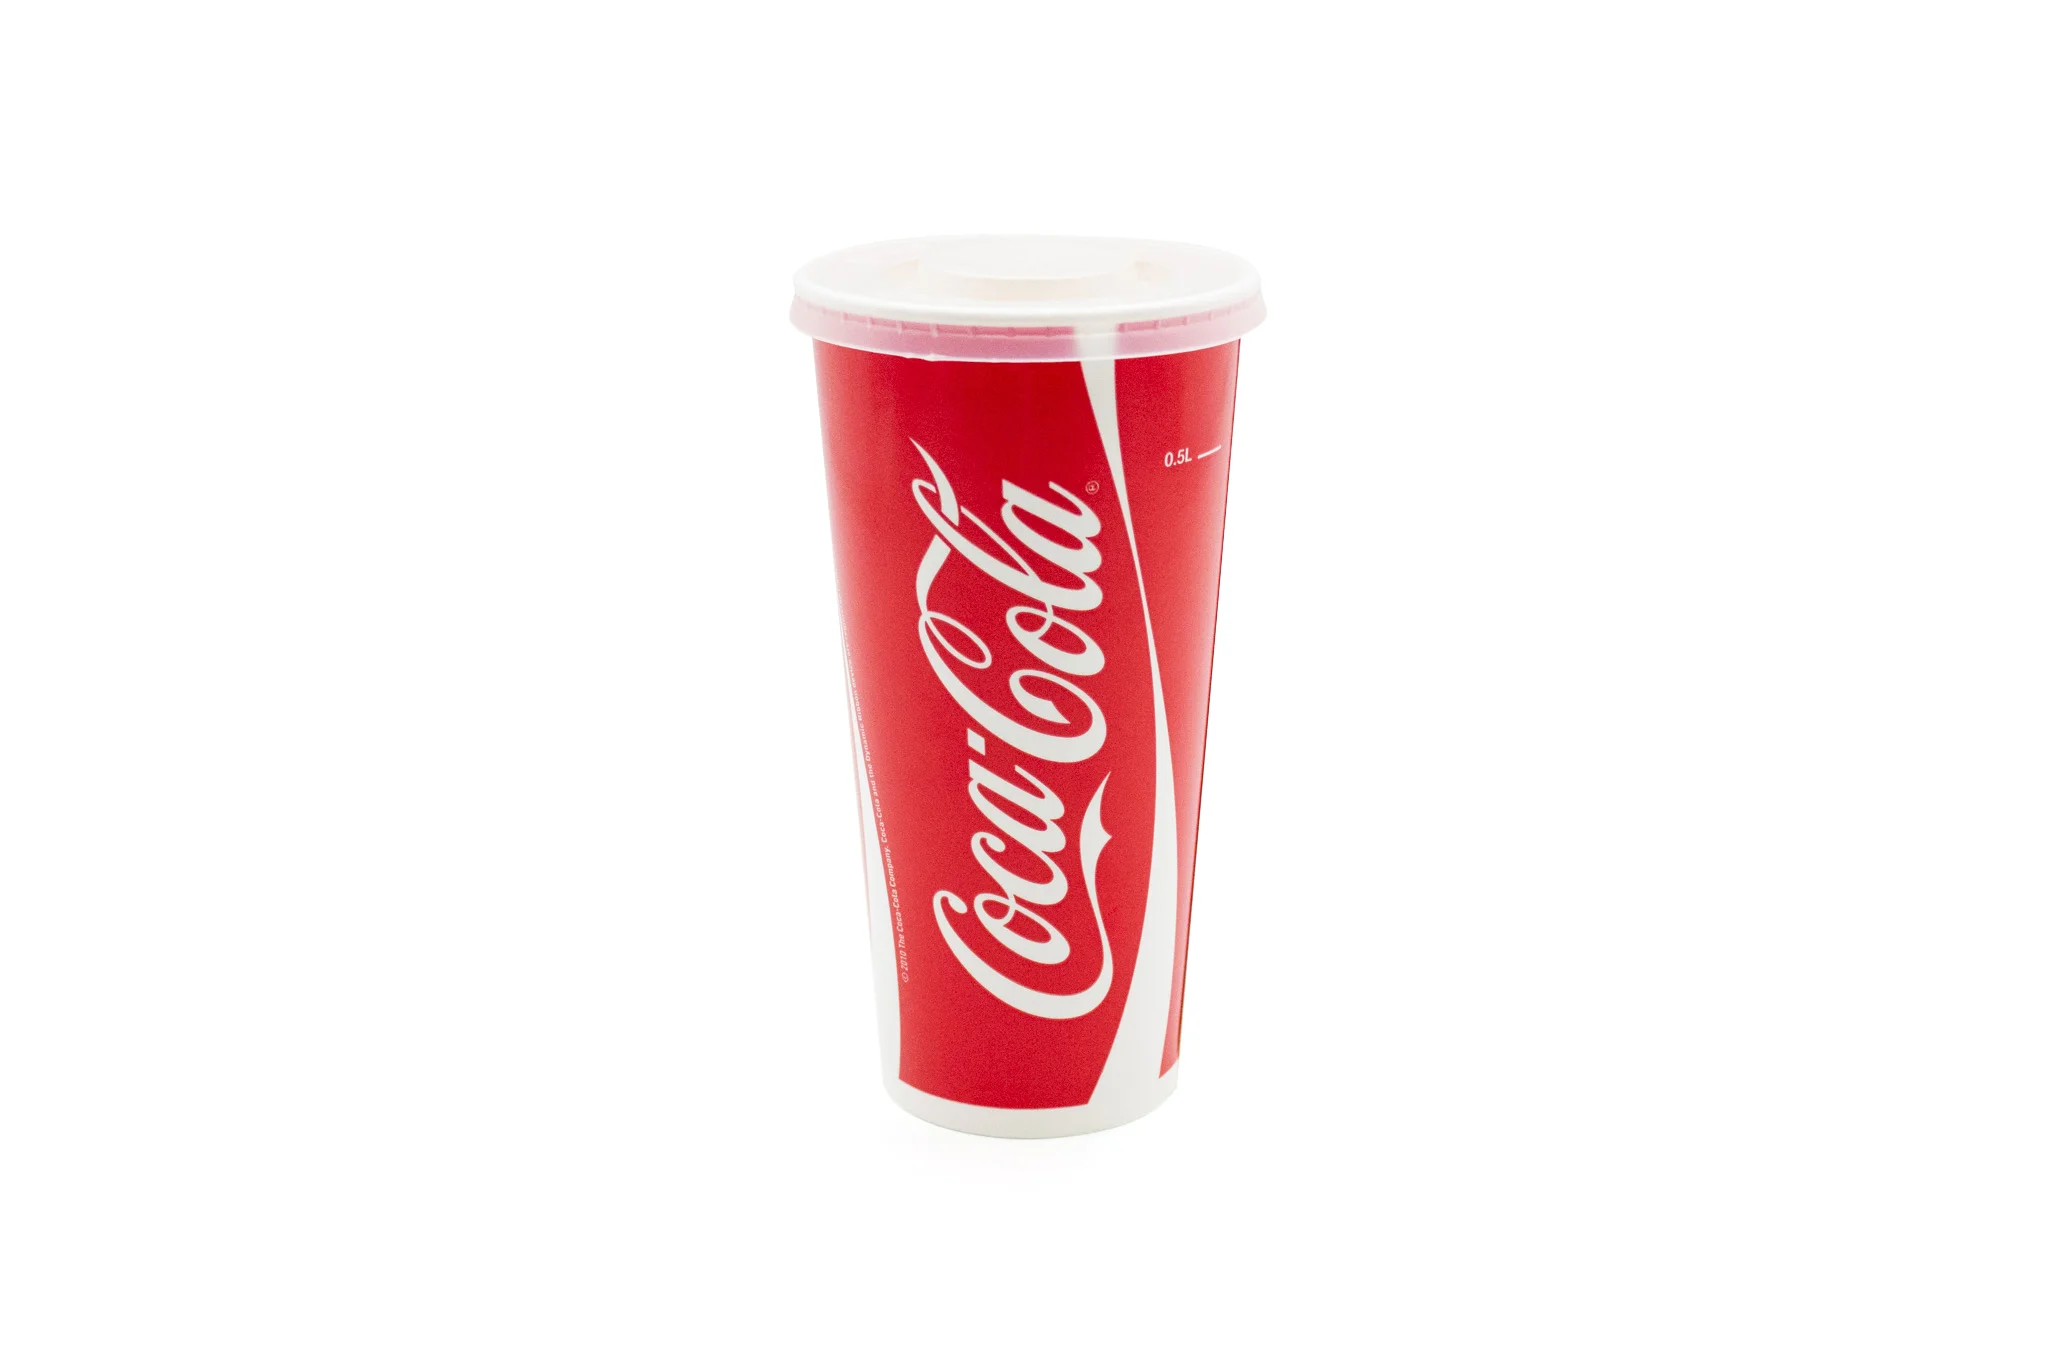 https://greenpak.supplies/wp-content/uploads/2023/02/22oz-Coca-Cola-Cup-with-lid.jpg.webp